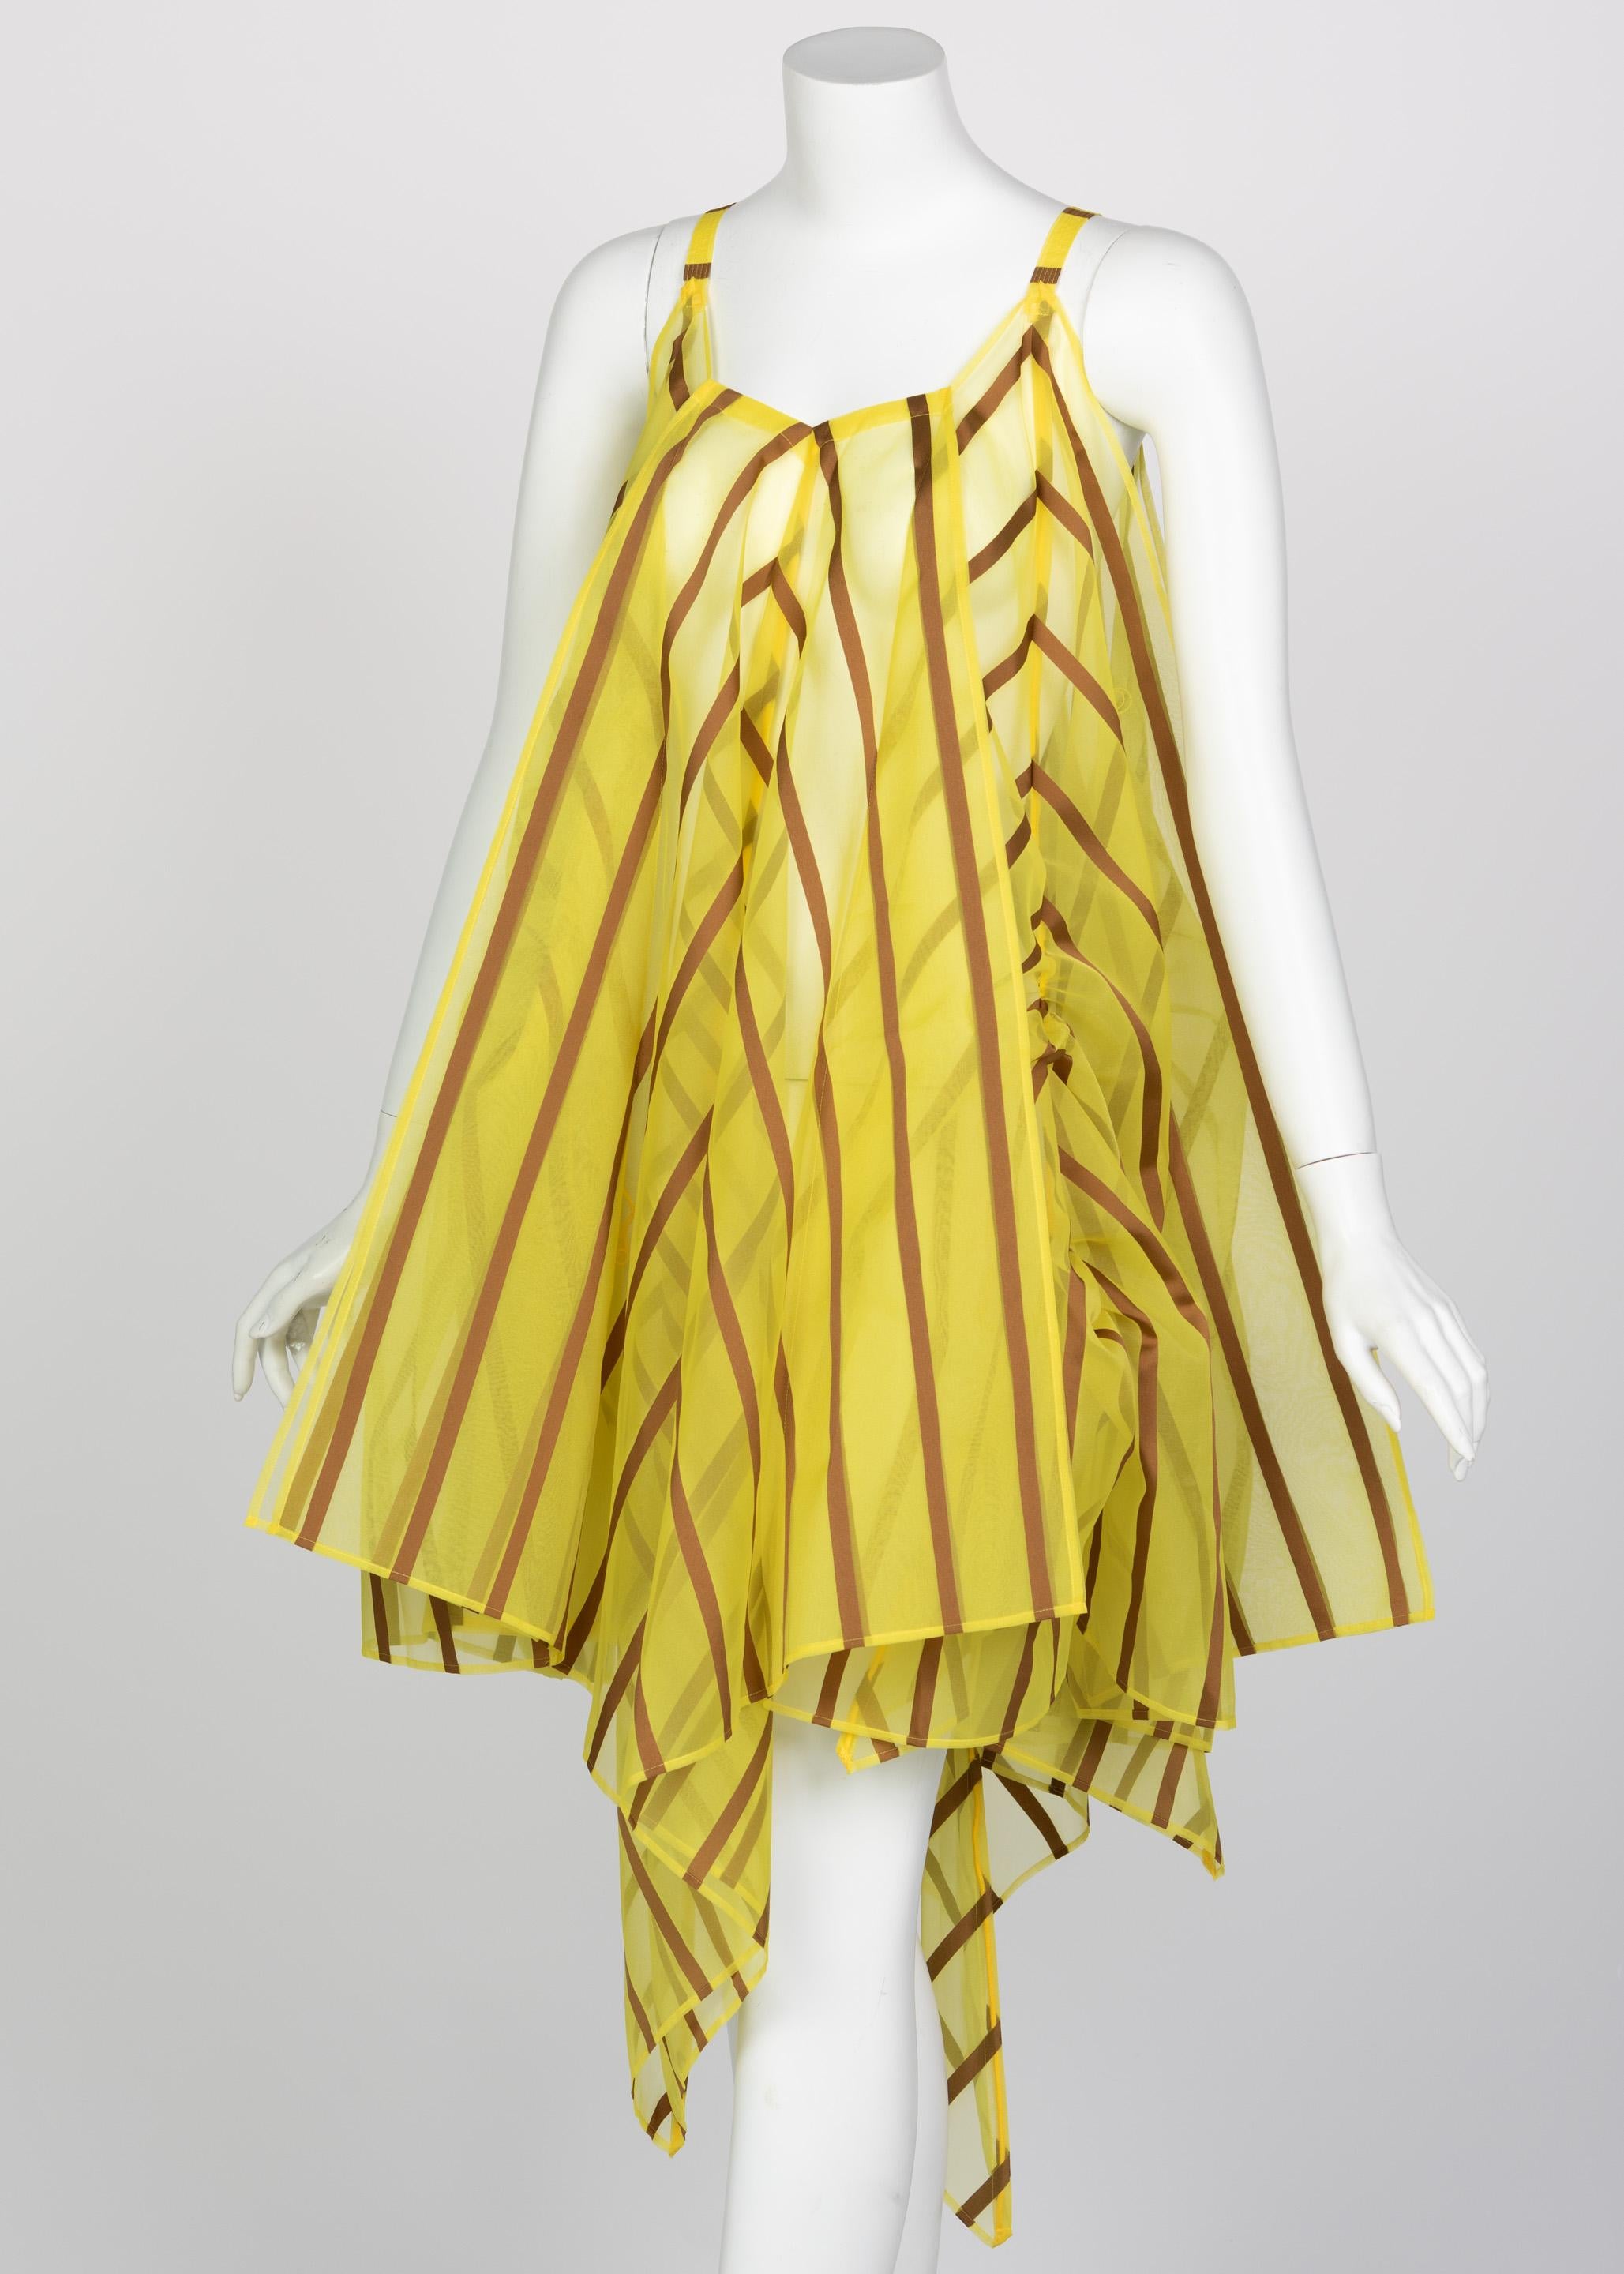 Issey Miyake Yellow Organza Brown Striped Handkerchief Dress For Sale 2